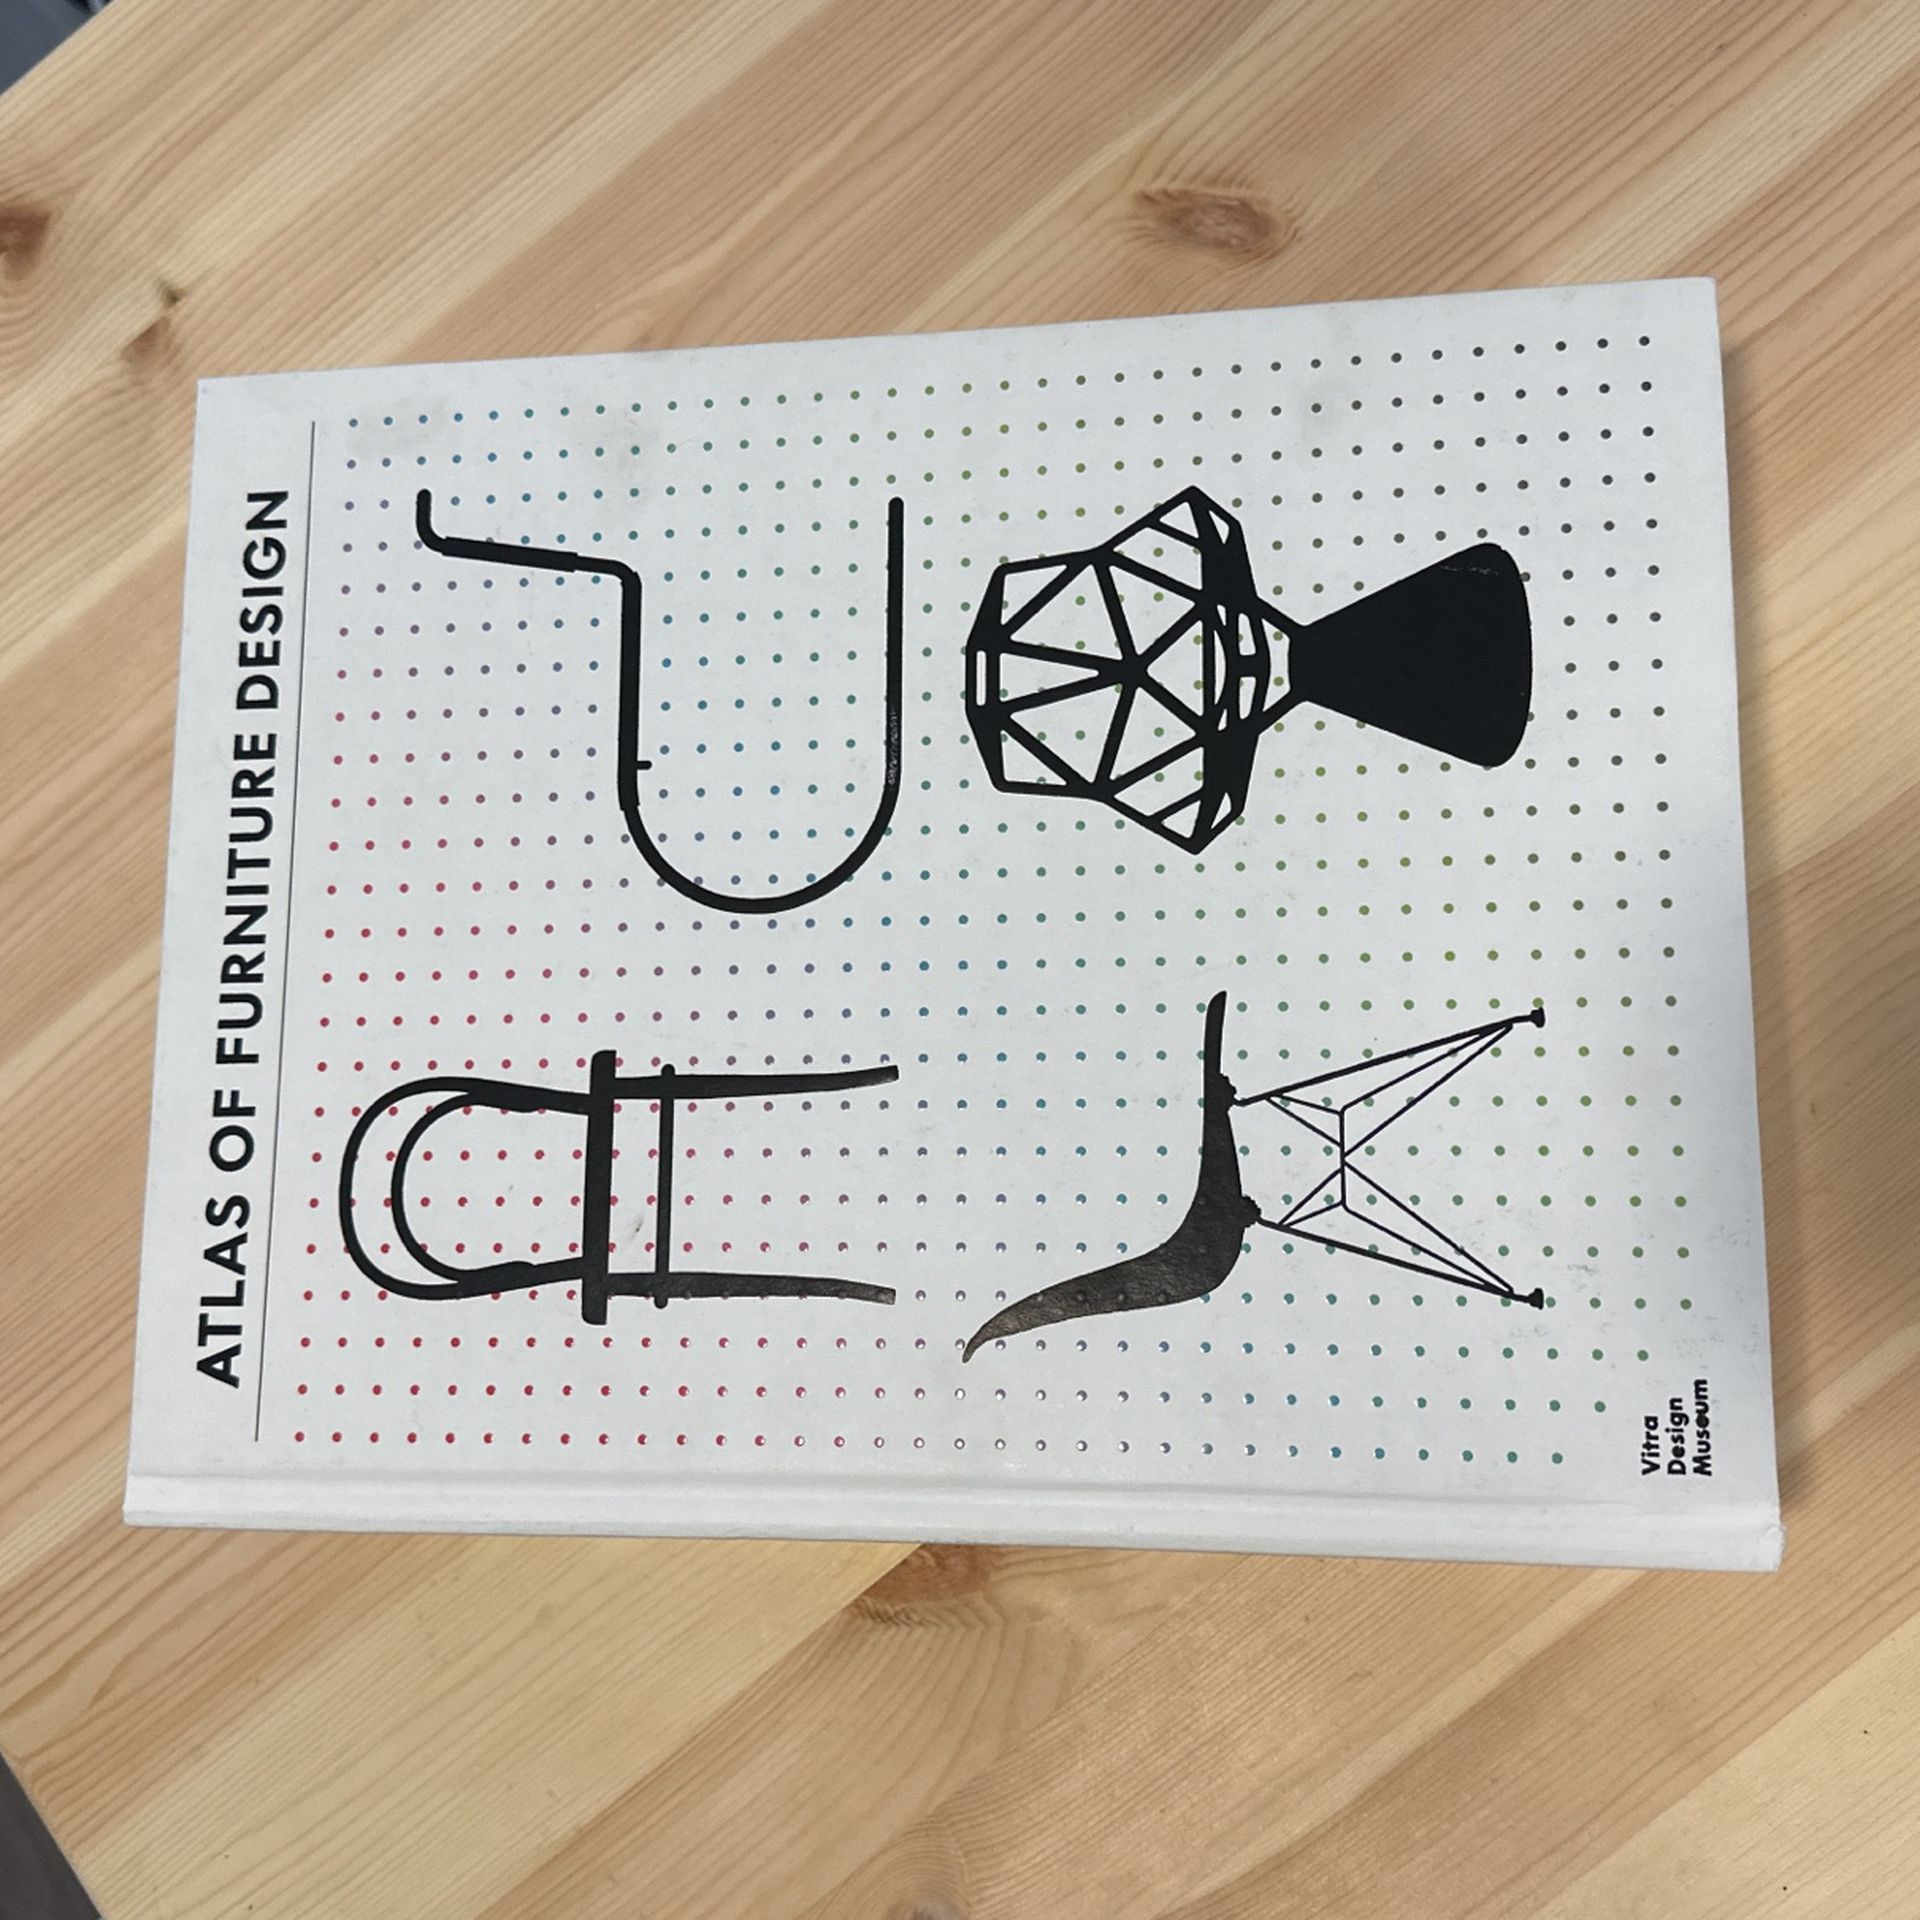 Atlas Of Furniture Design Book $100